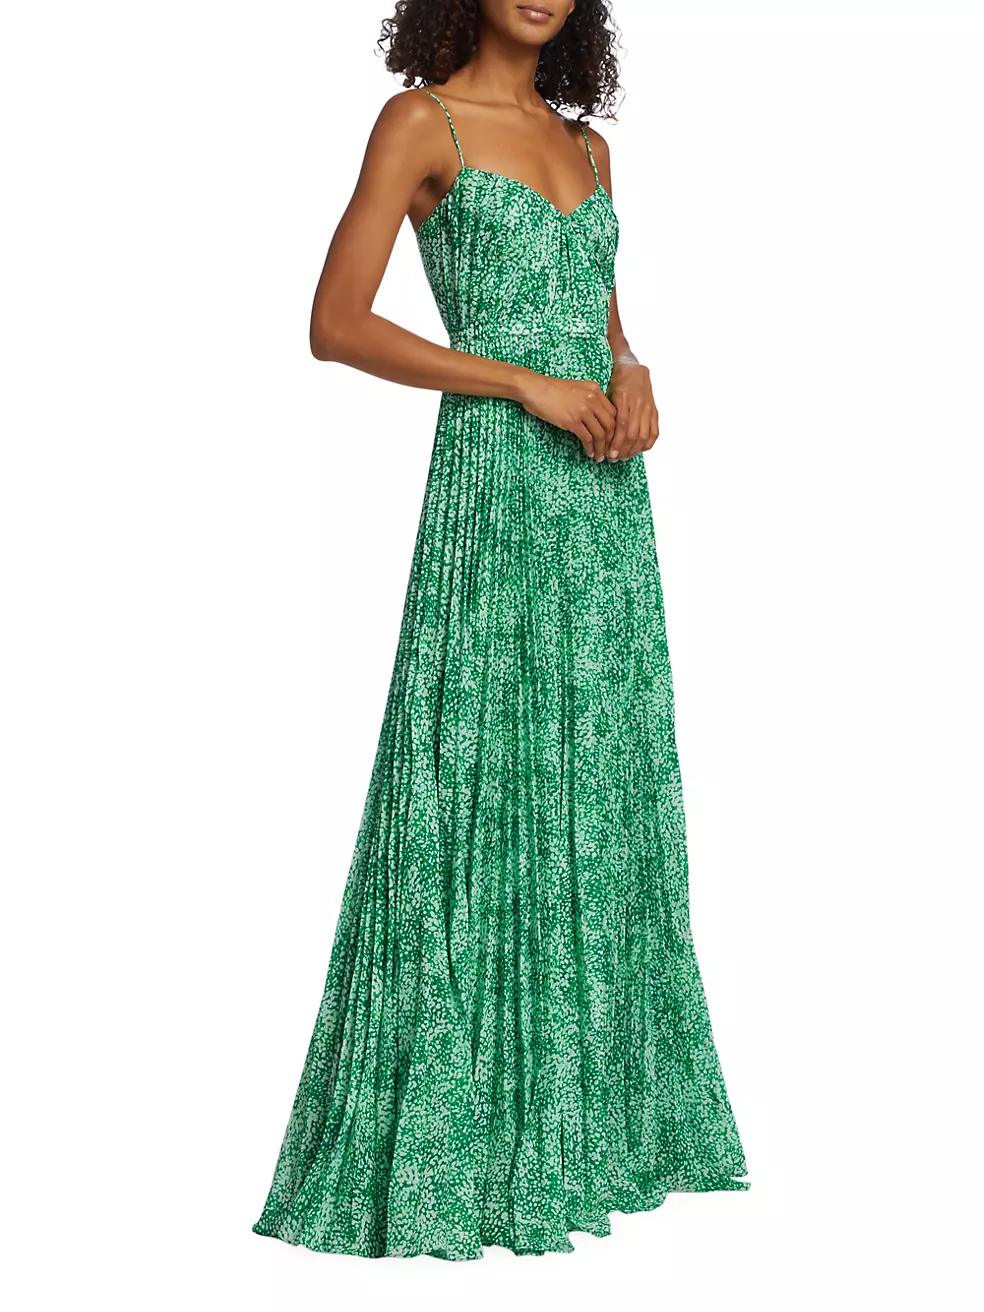 Spotted: Designer Dress Look-A-Like (Under $100)